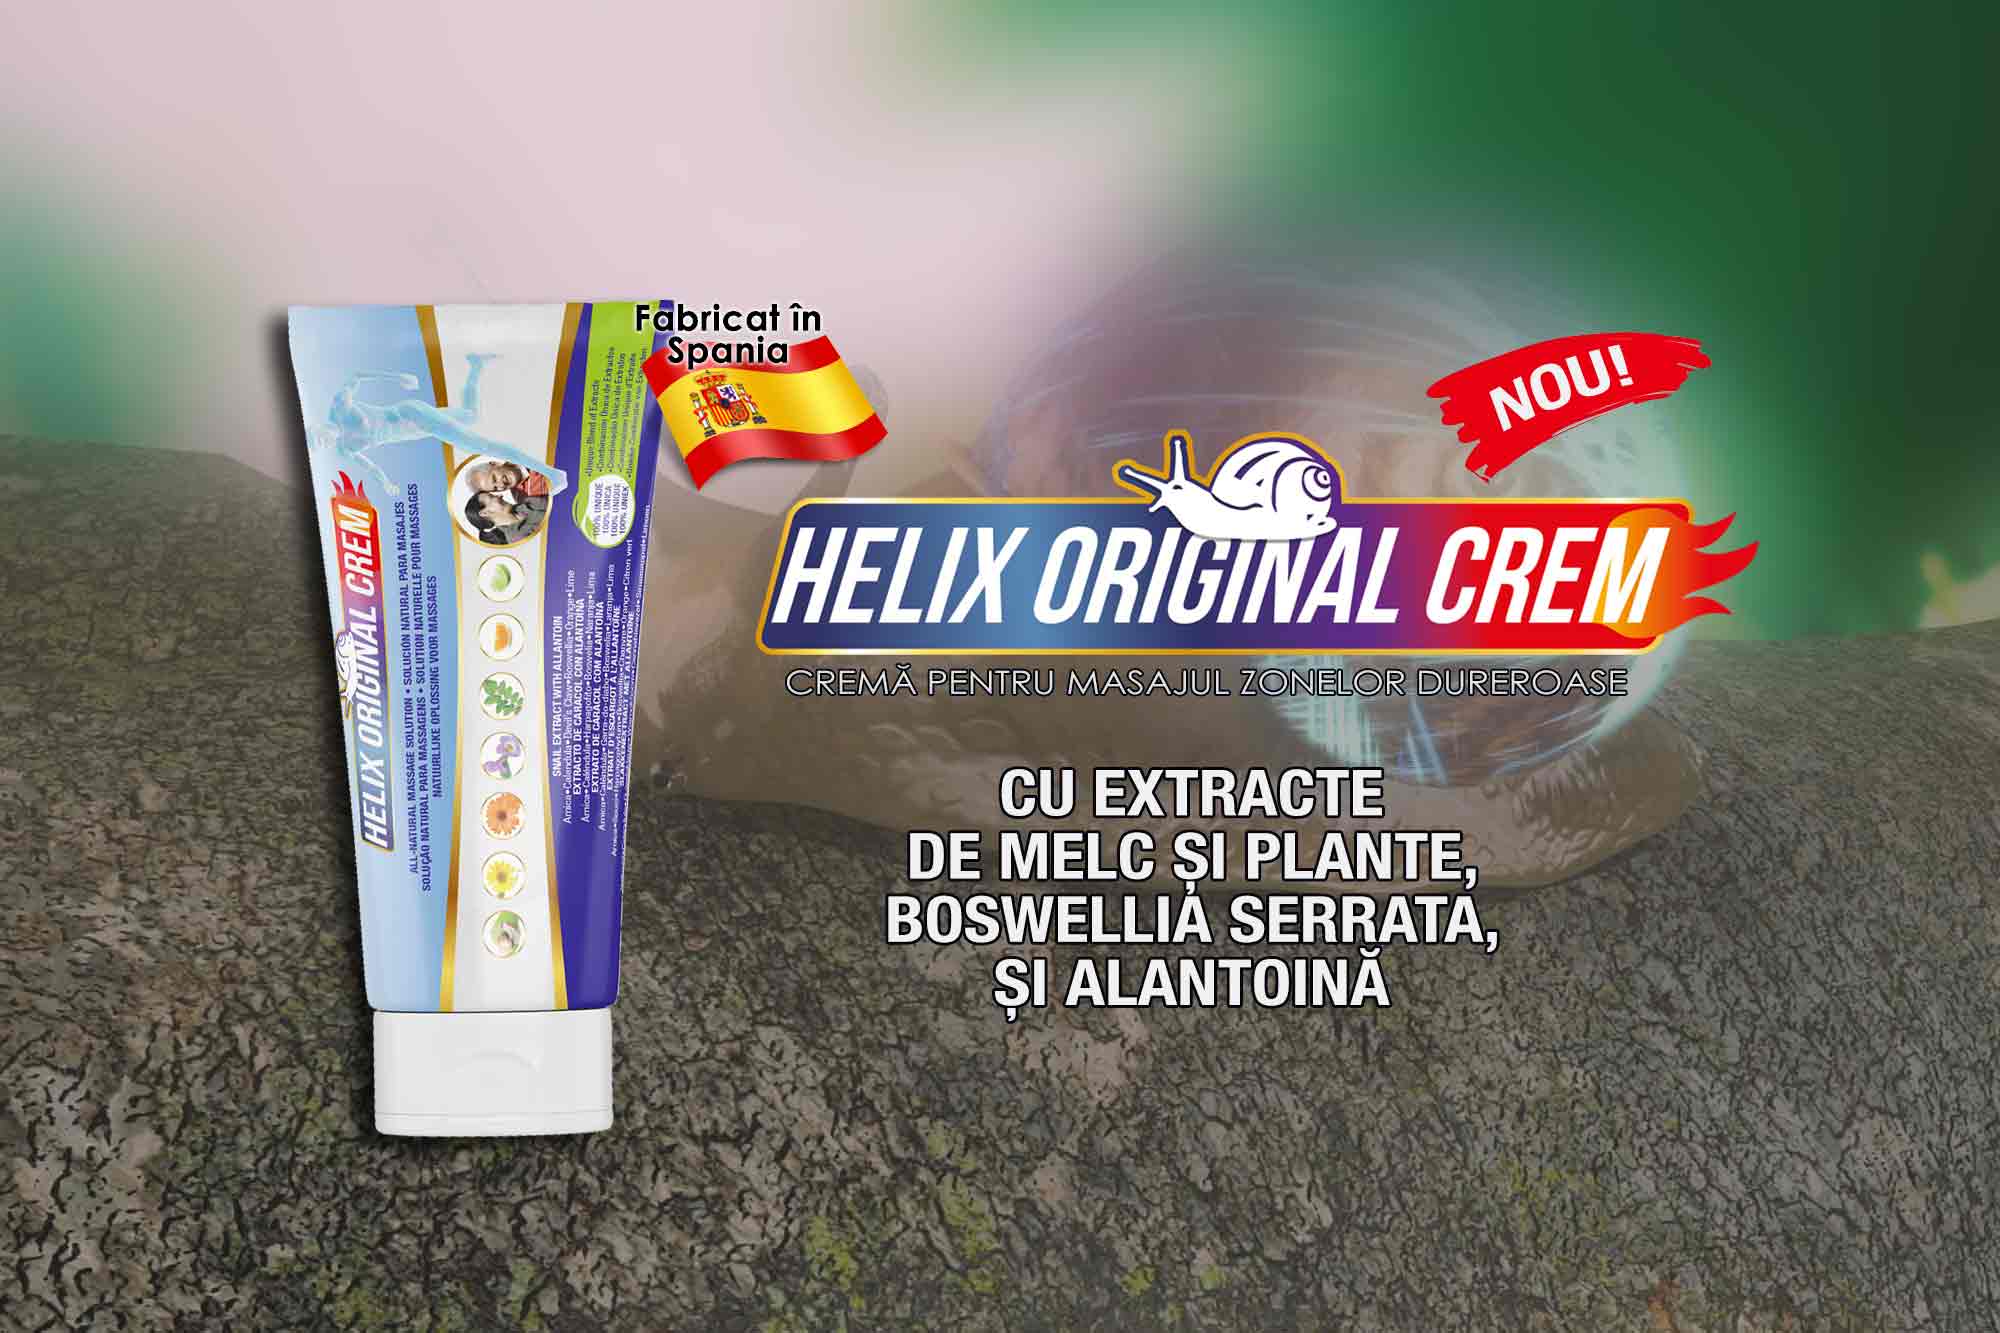 Helix Original Cream